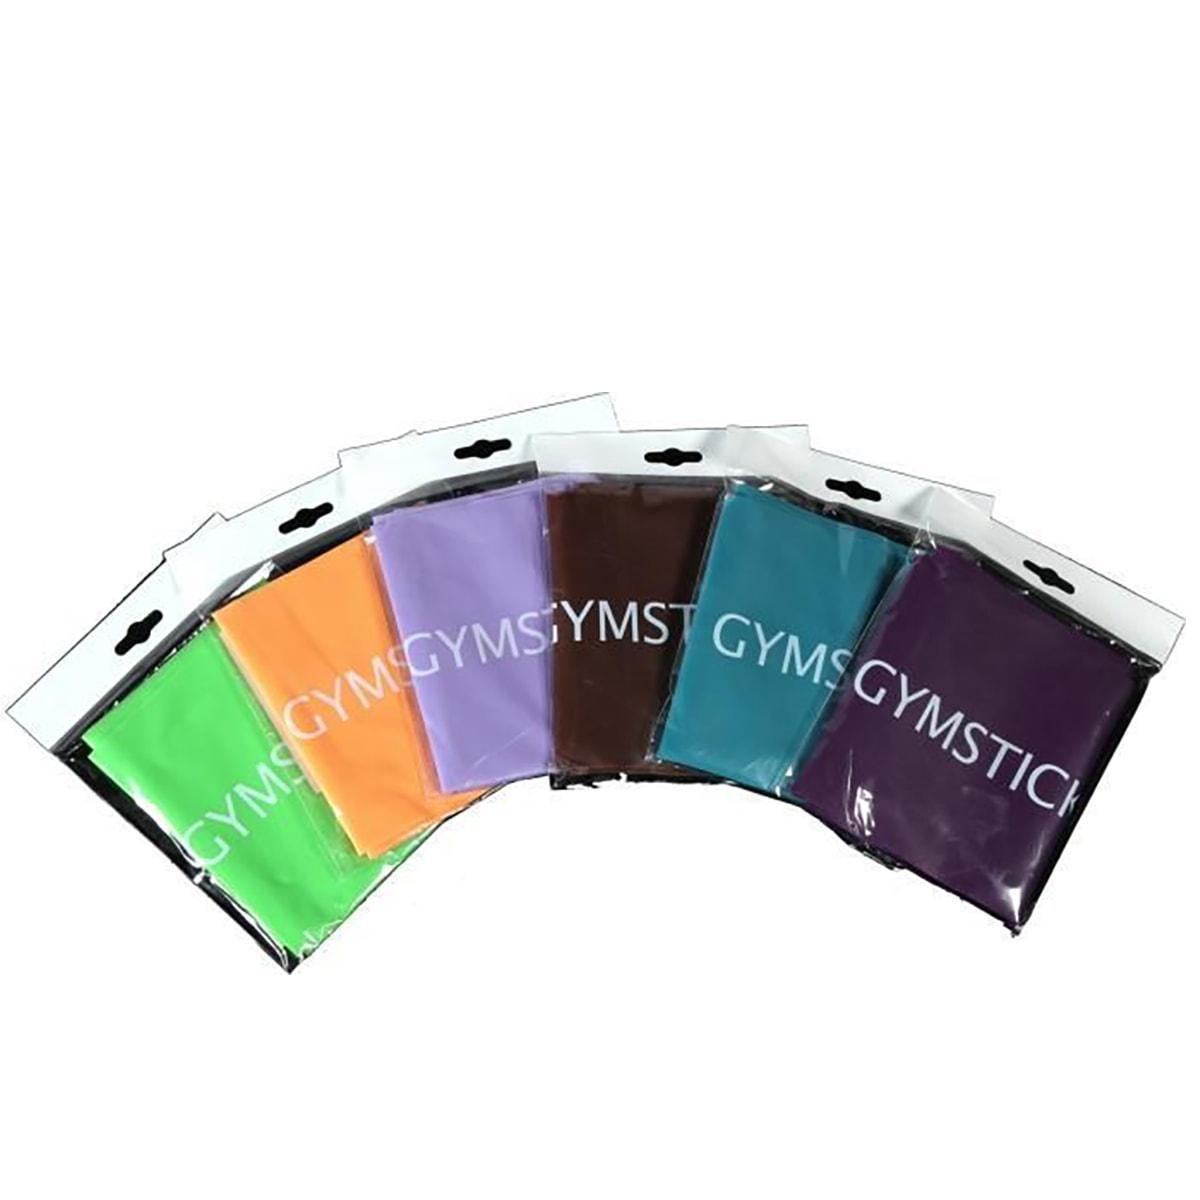 Gymstick Pro Exercise Powerband